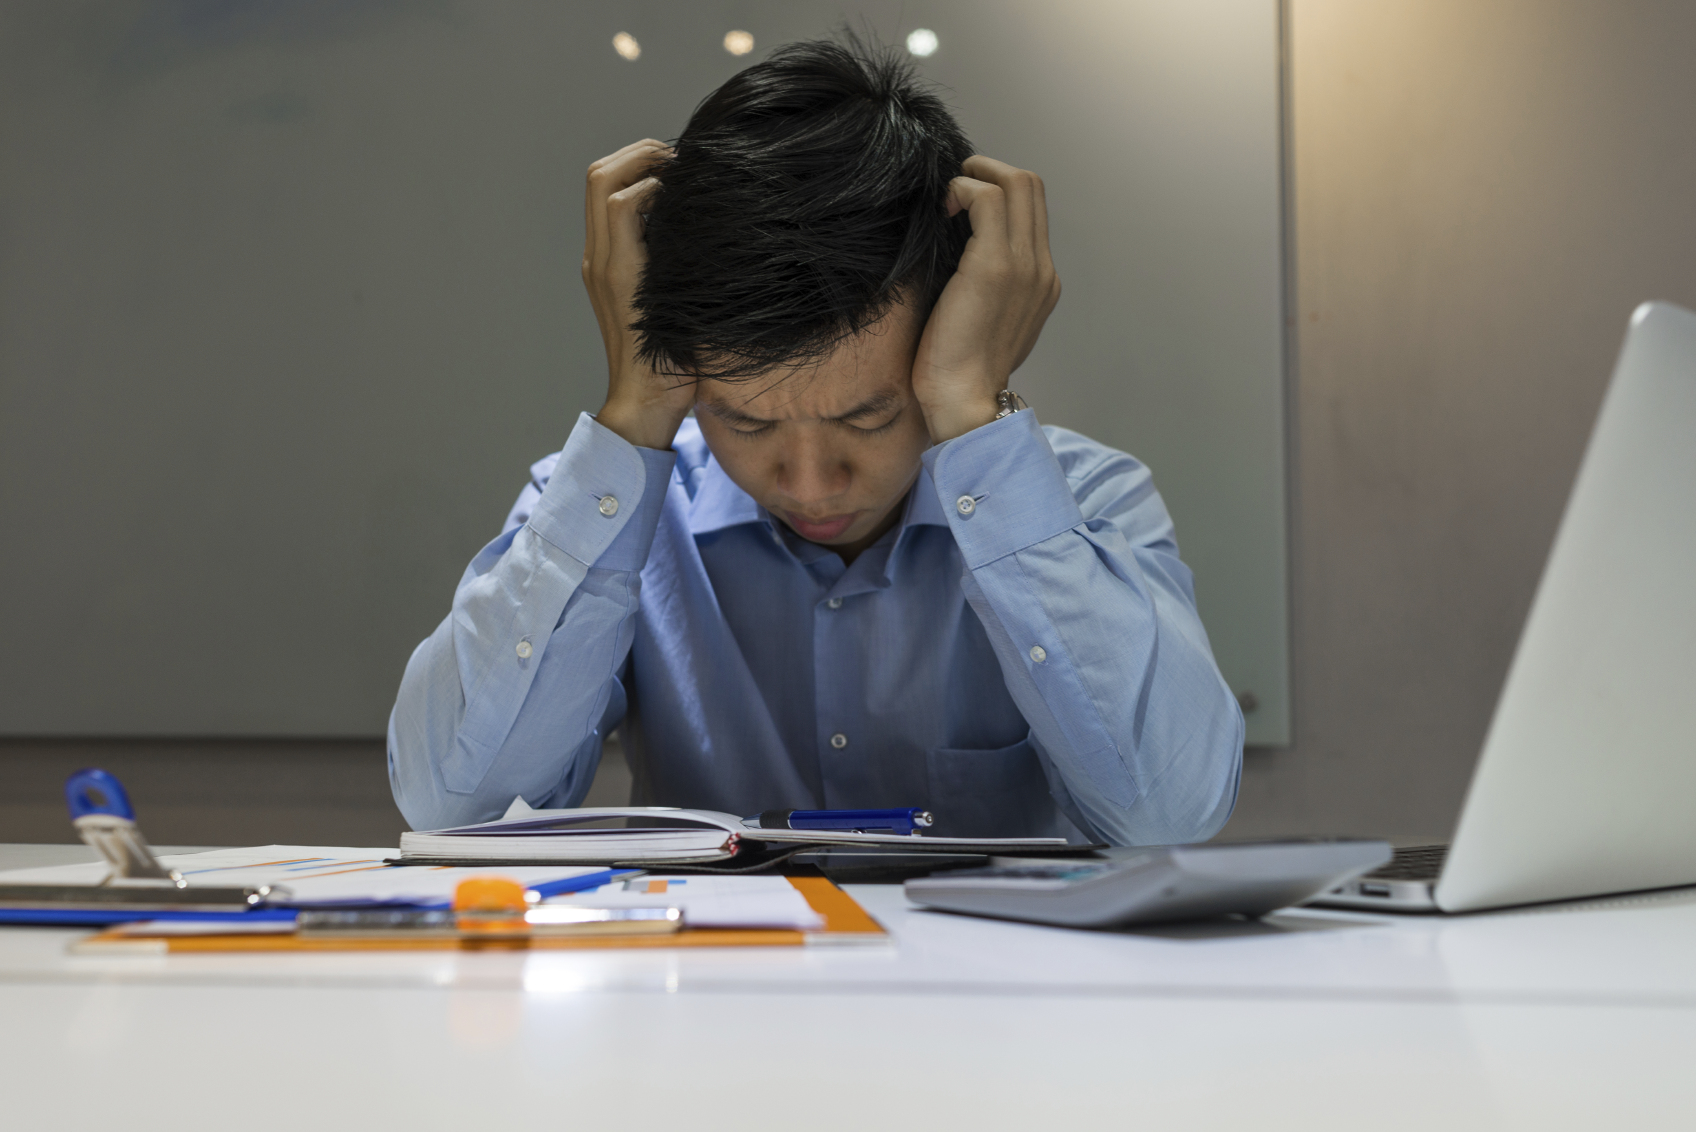 avoiding employee burnout